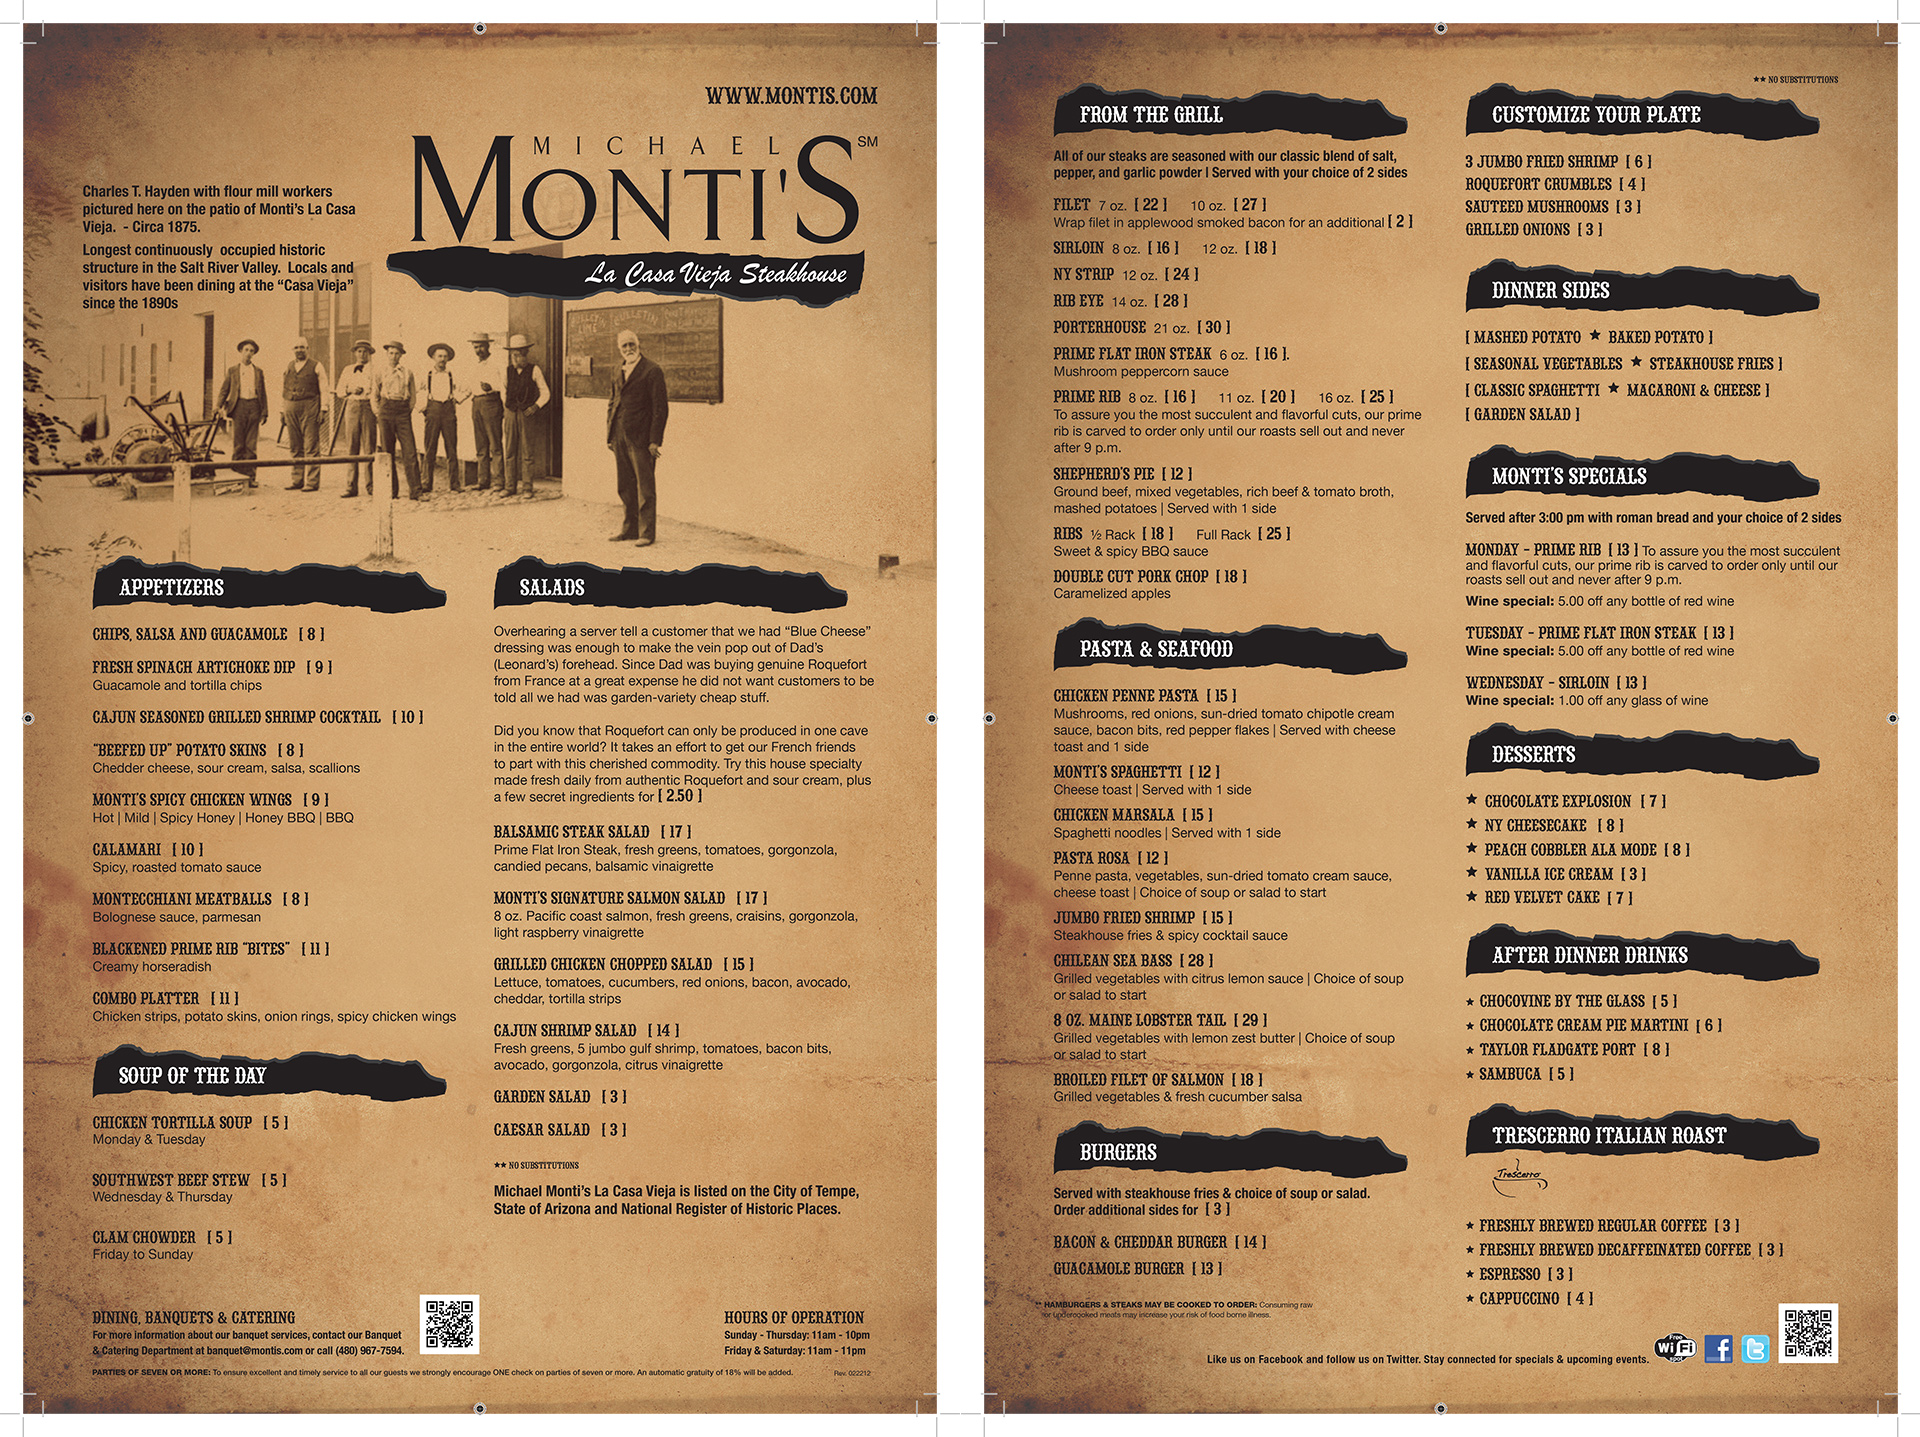 Monti's Menu Design 2012